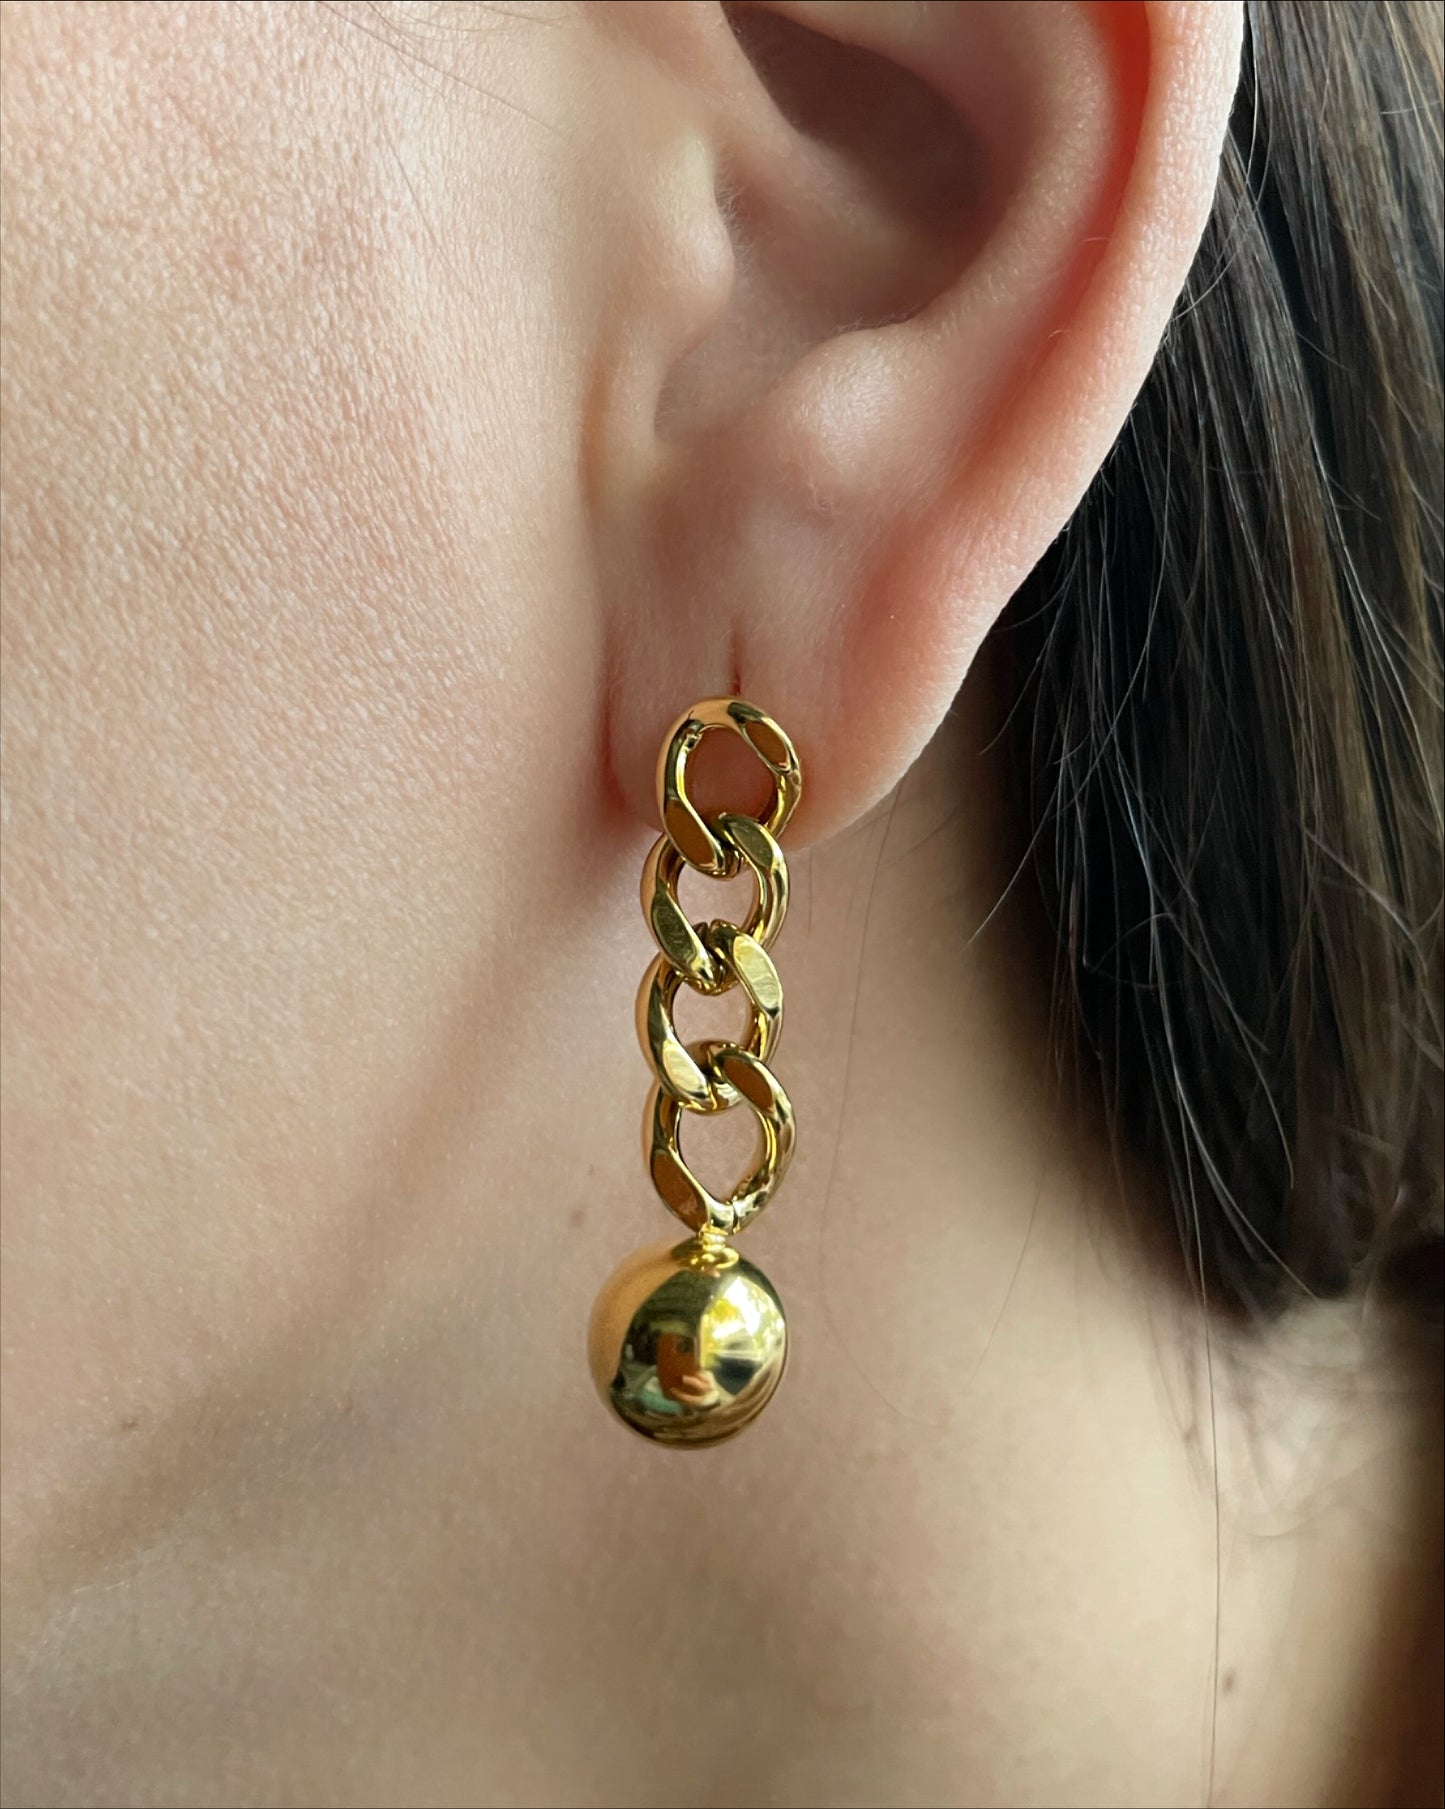 Stainless chain steel ball earrings